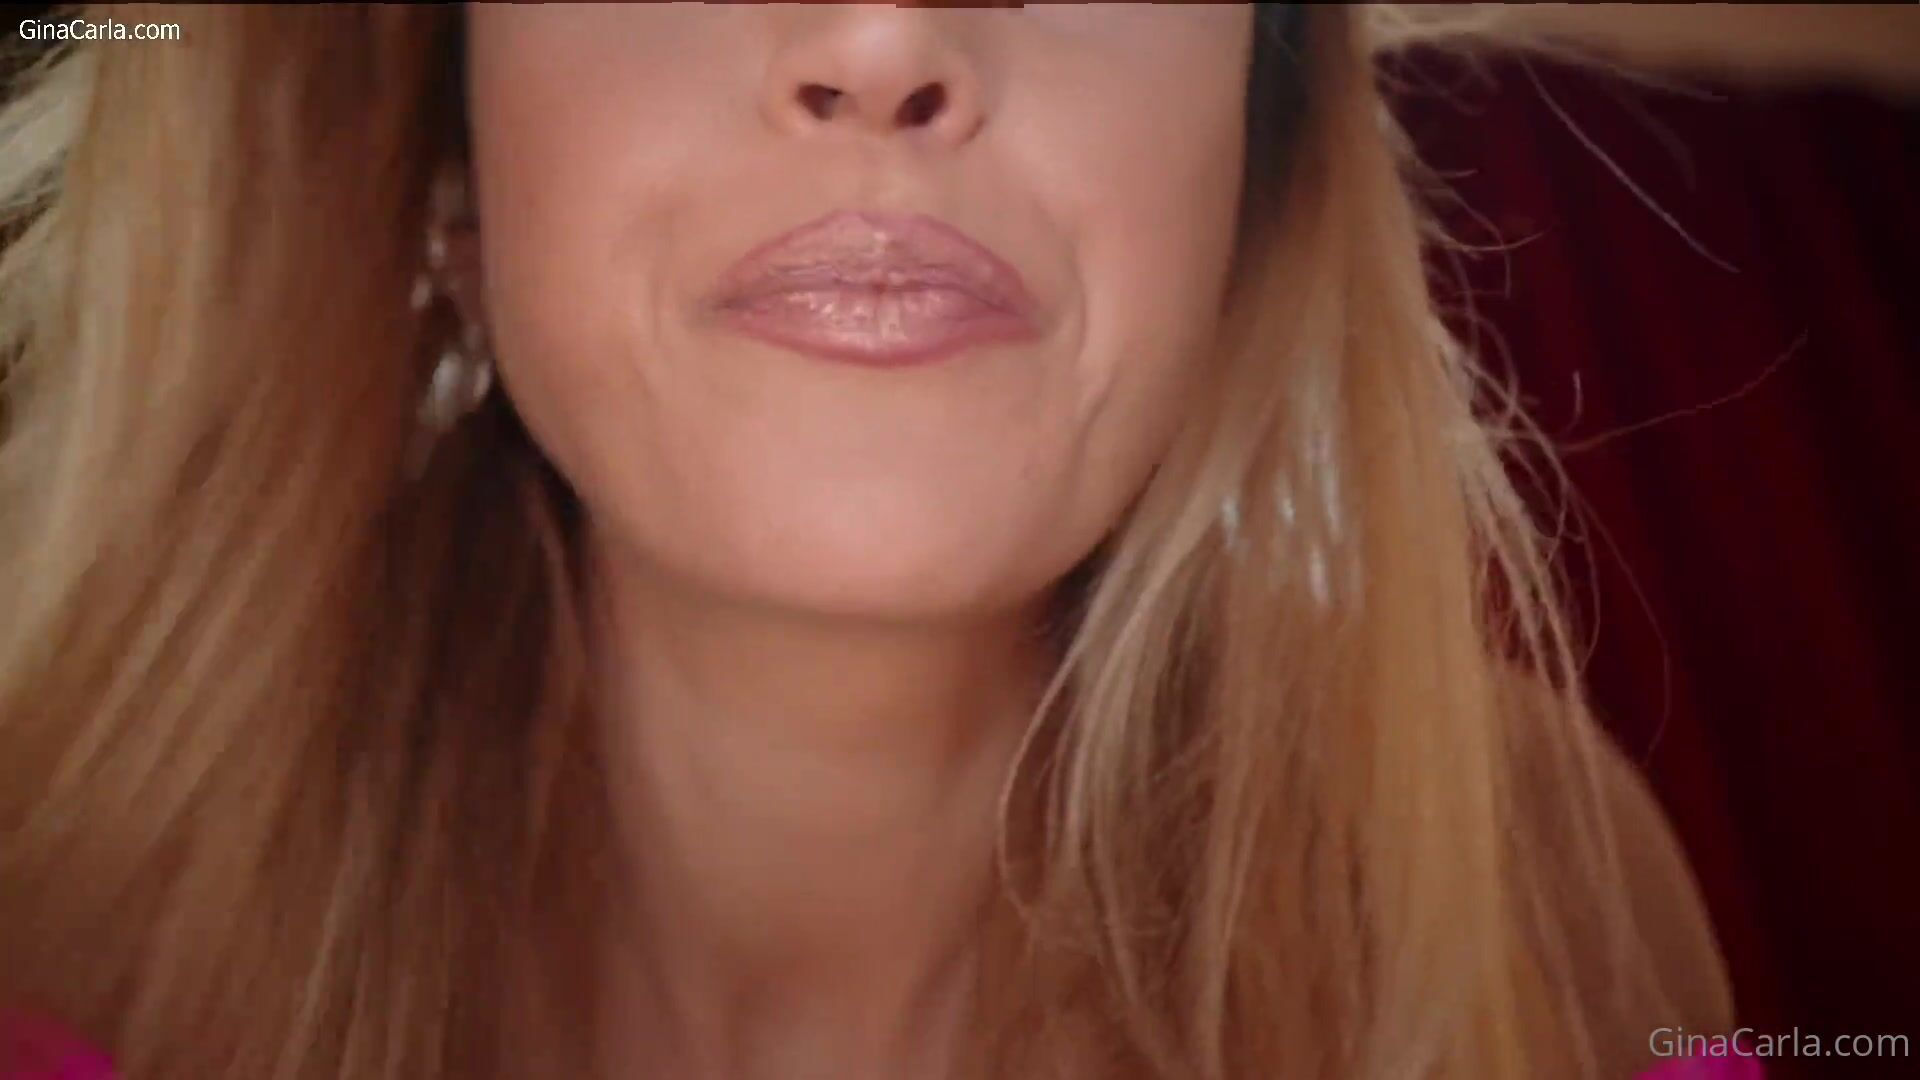 Gina Carla Porno - Gina Carla Nude Giantess Roleplay Premium ASMR Video - Thothub